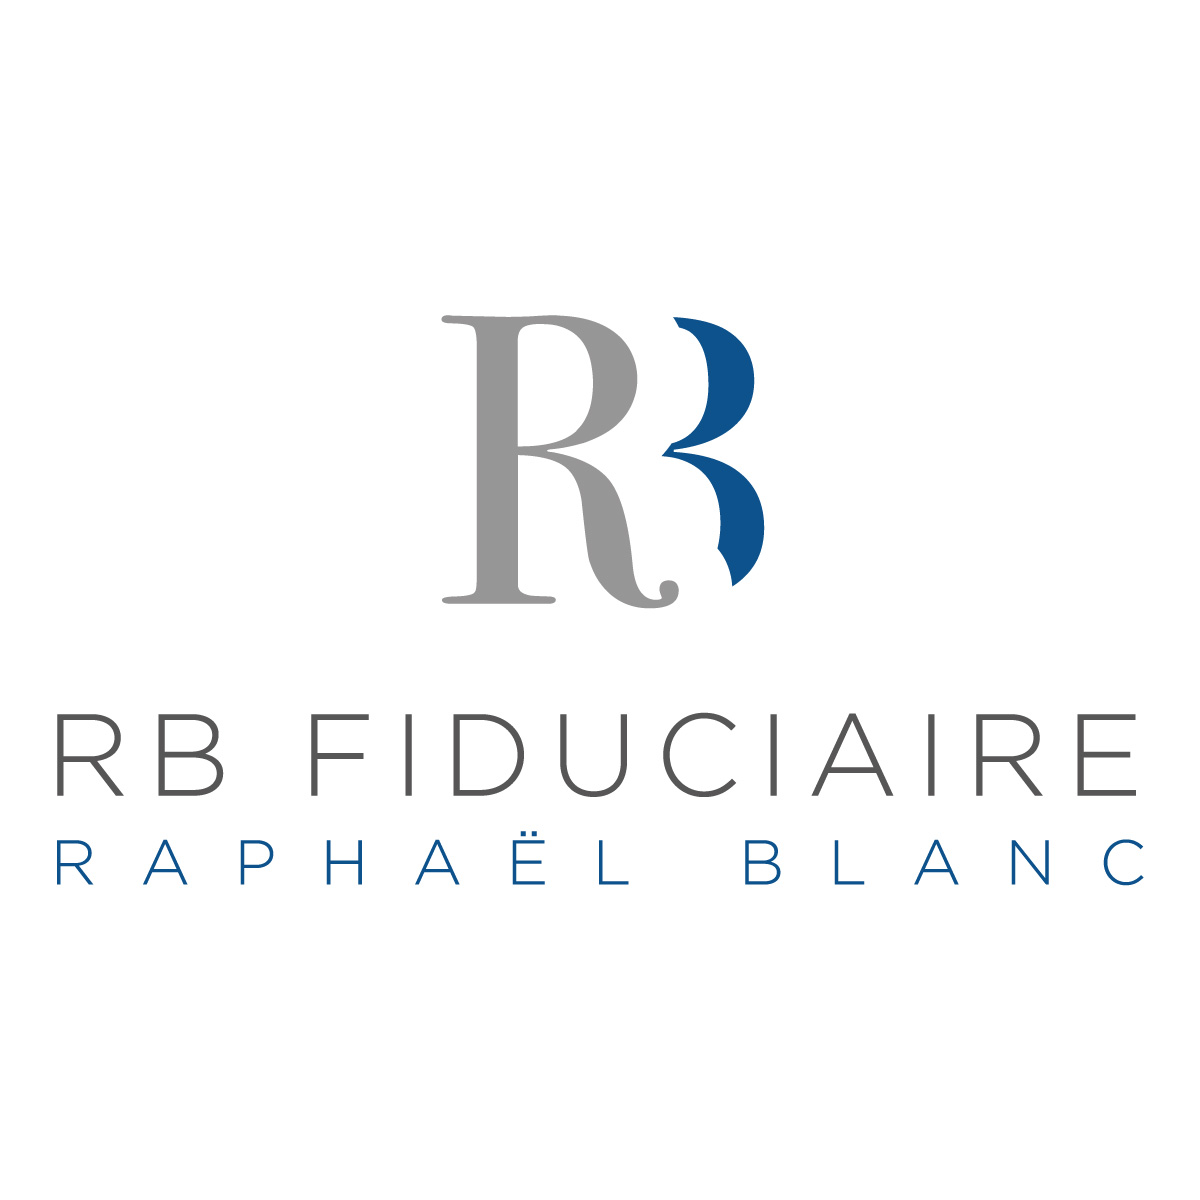 Raphaël Blanc